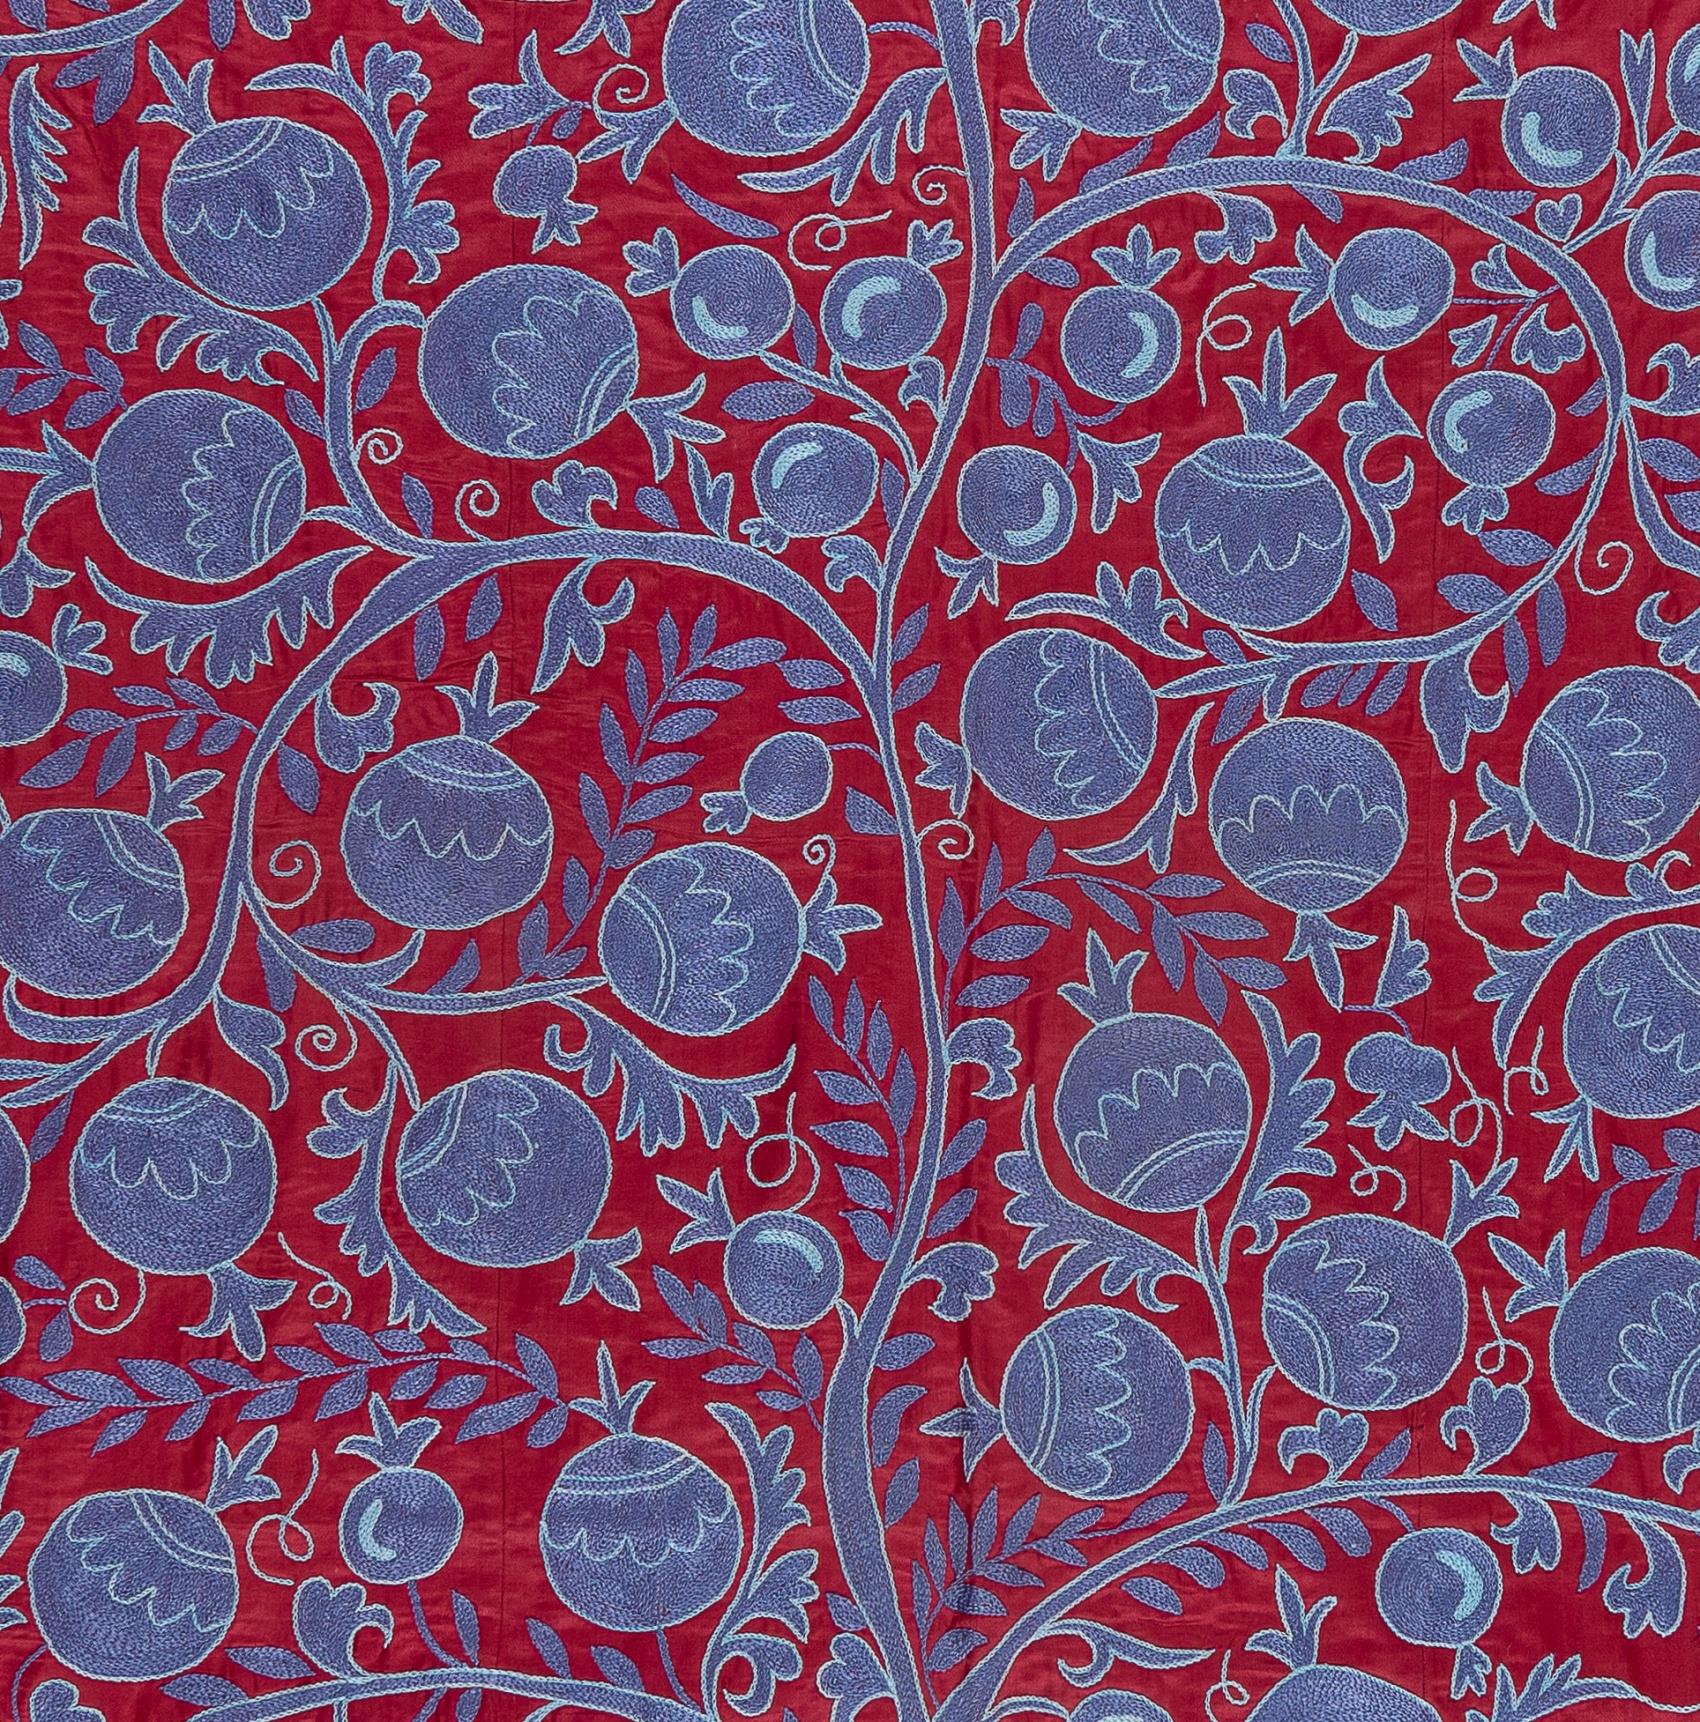 Uzbek 5x7 ft Pomegranate Tree Design Bedspread in Red & Purple, Silk Embroidery Throw